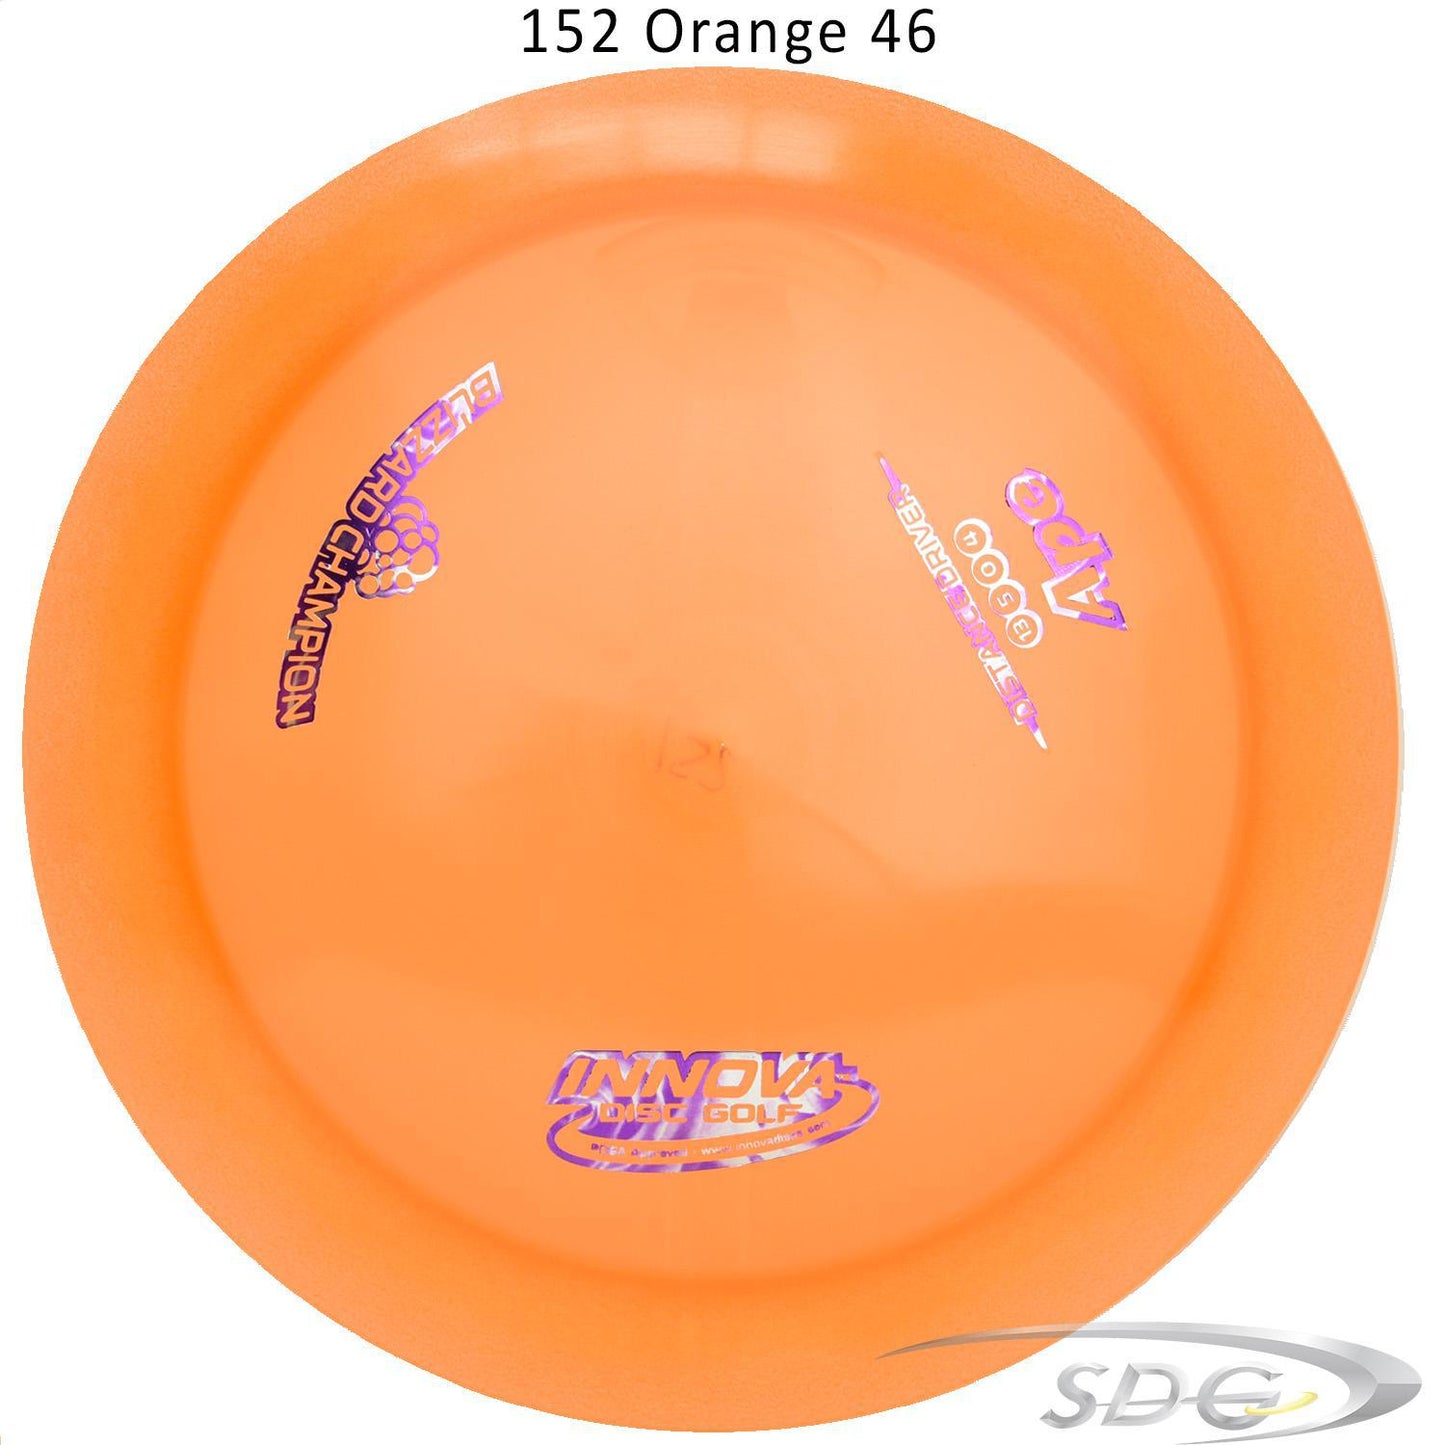 innova-blizzard-champion-ape-disc-golf-distance-driver 152 Orange 46 